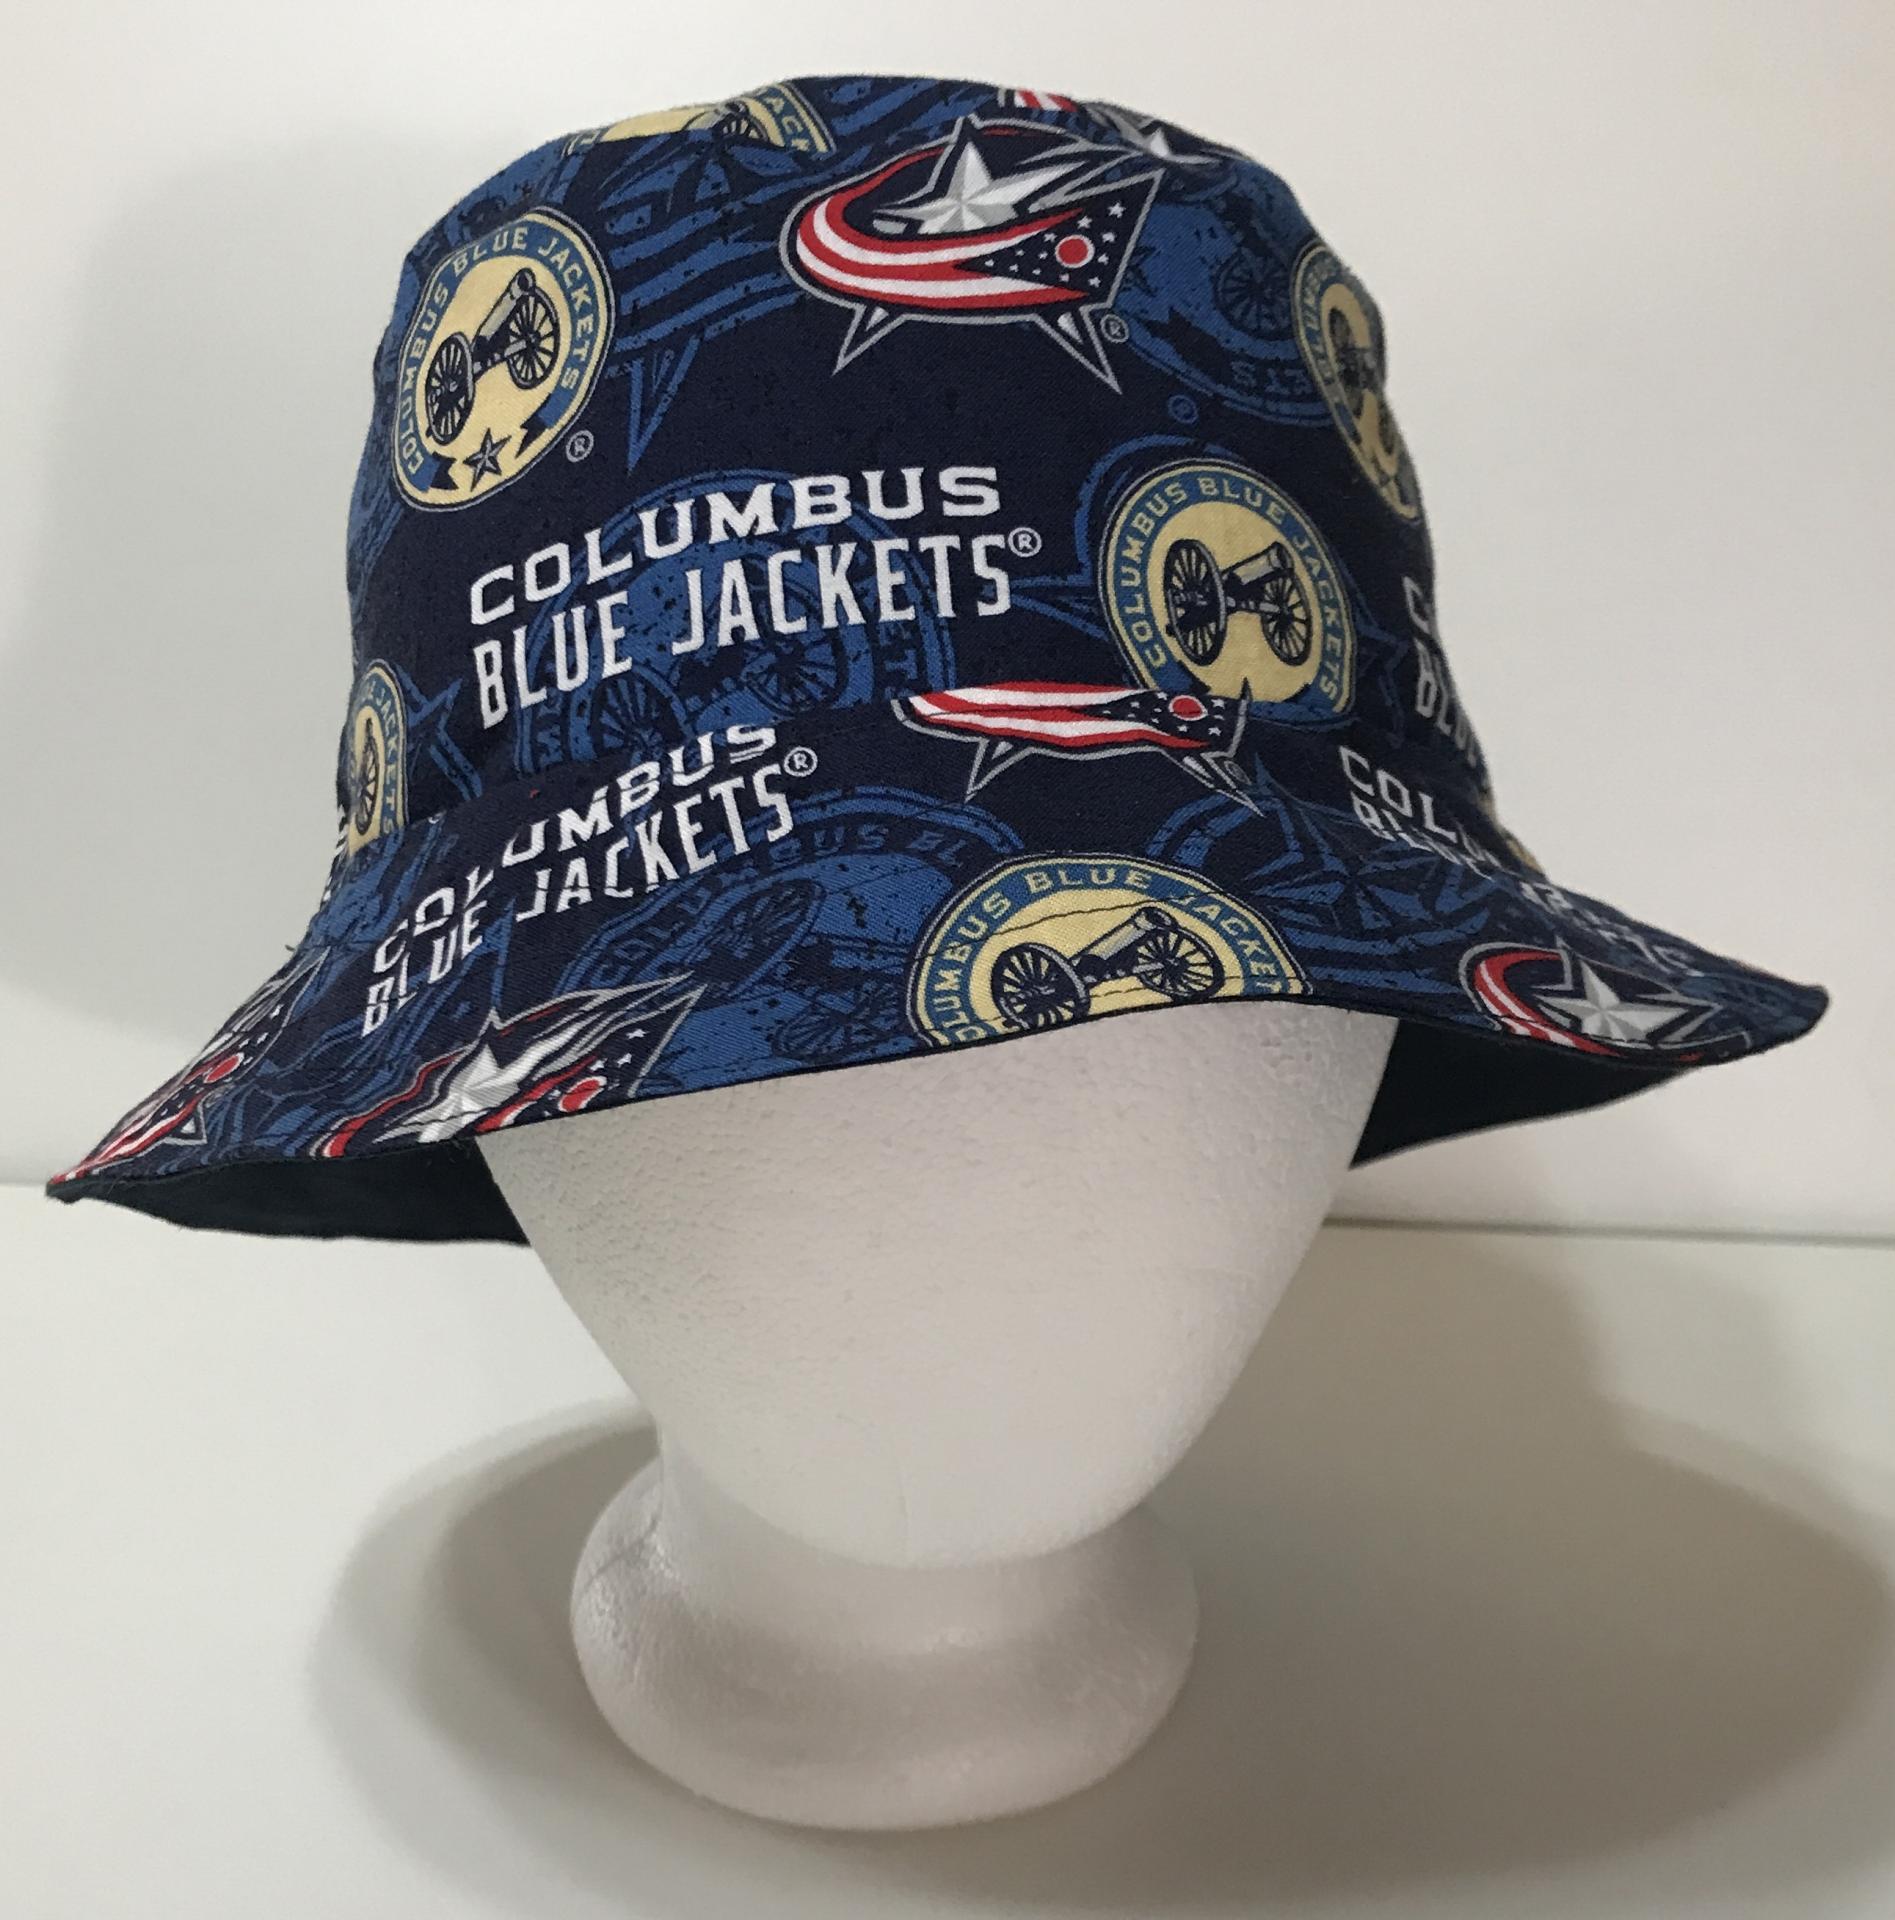 Columbus Blue Jackets Bucket Hat, Reversible, Ohio Hockey, Unisex Sizes S-XXL, handmade, cotton, summer fishing hat, sun hat, floppy hat, adults or older children